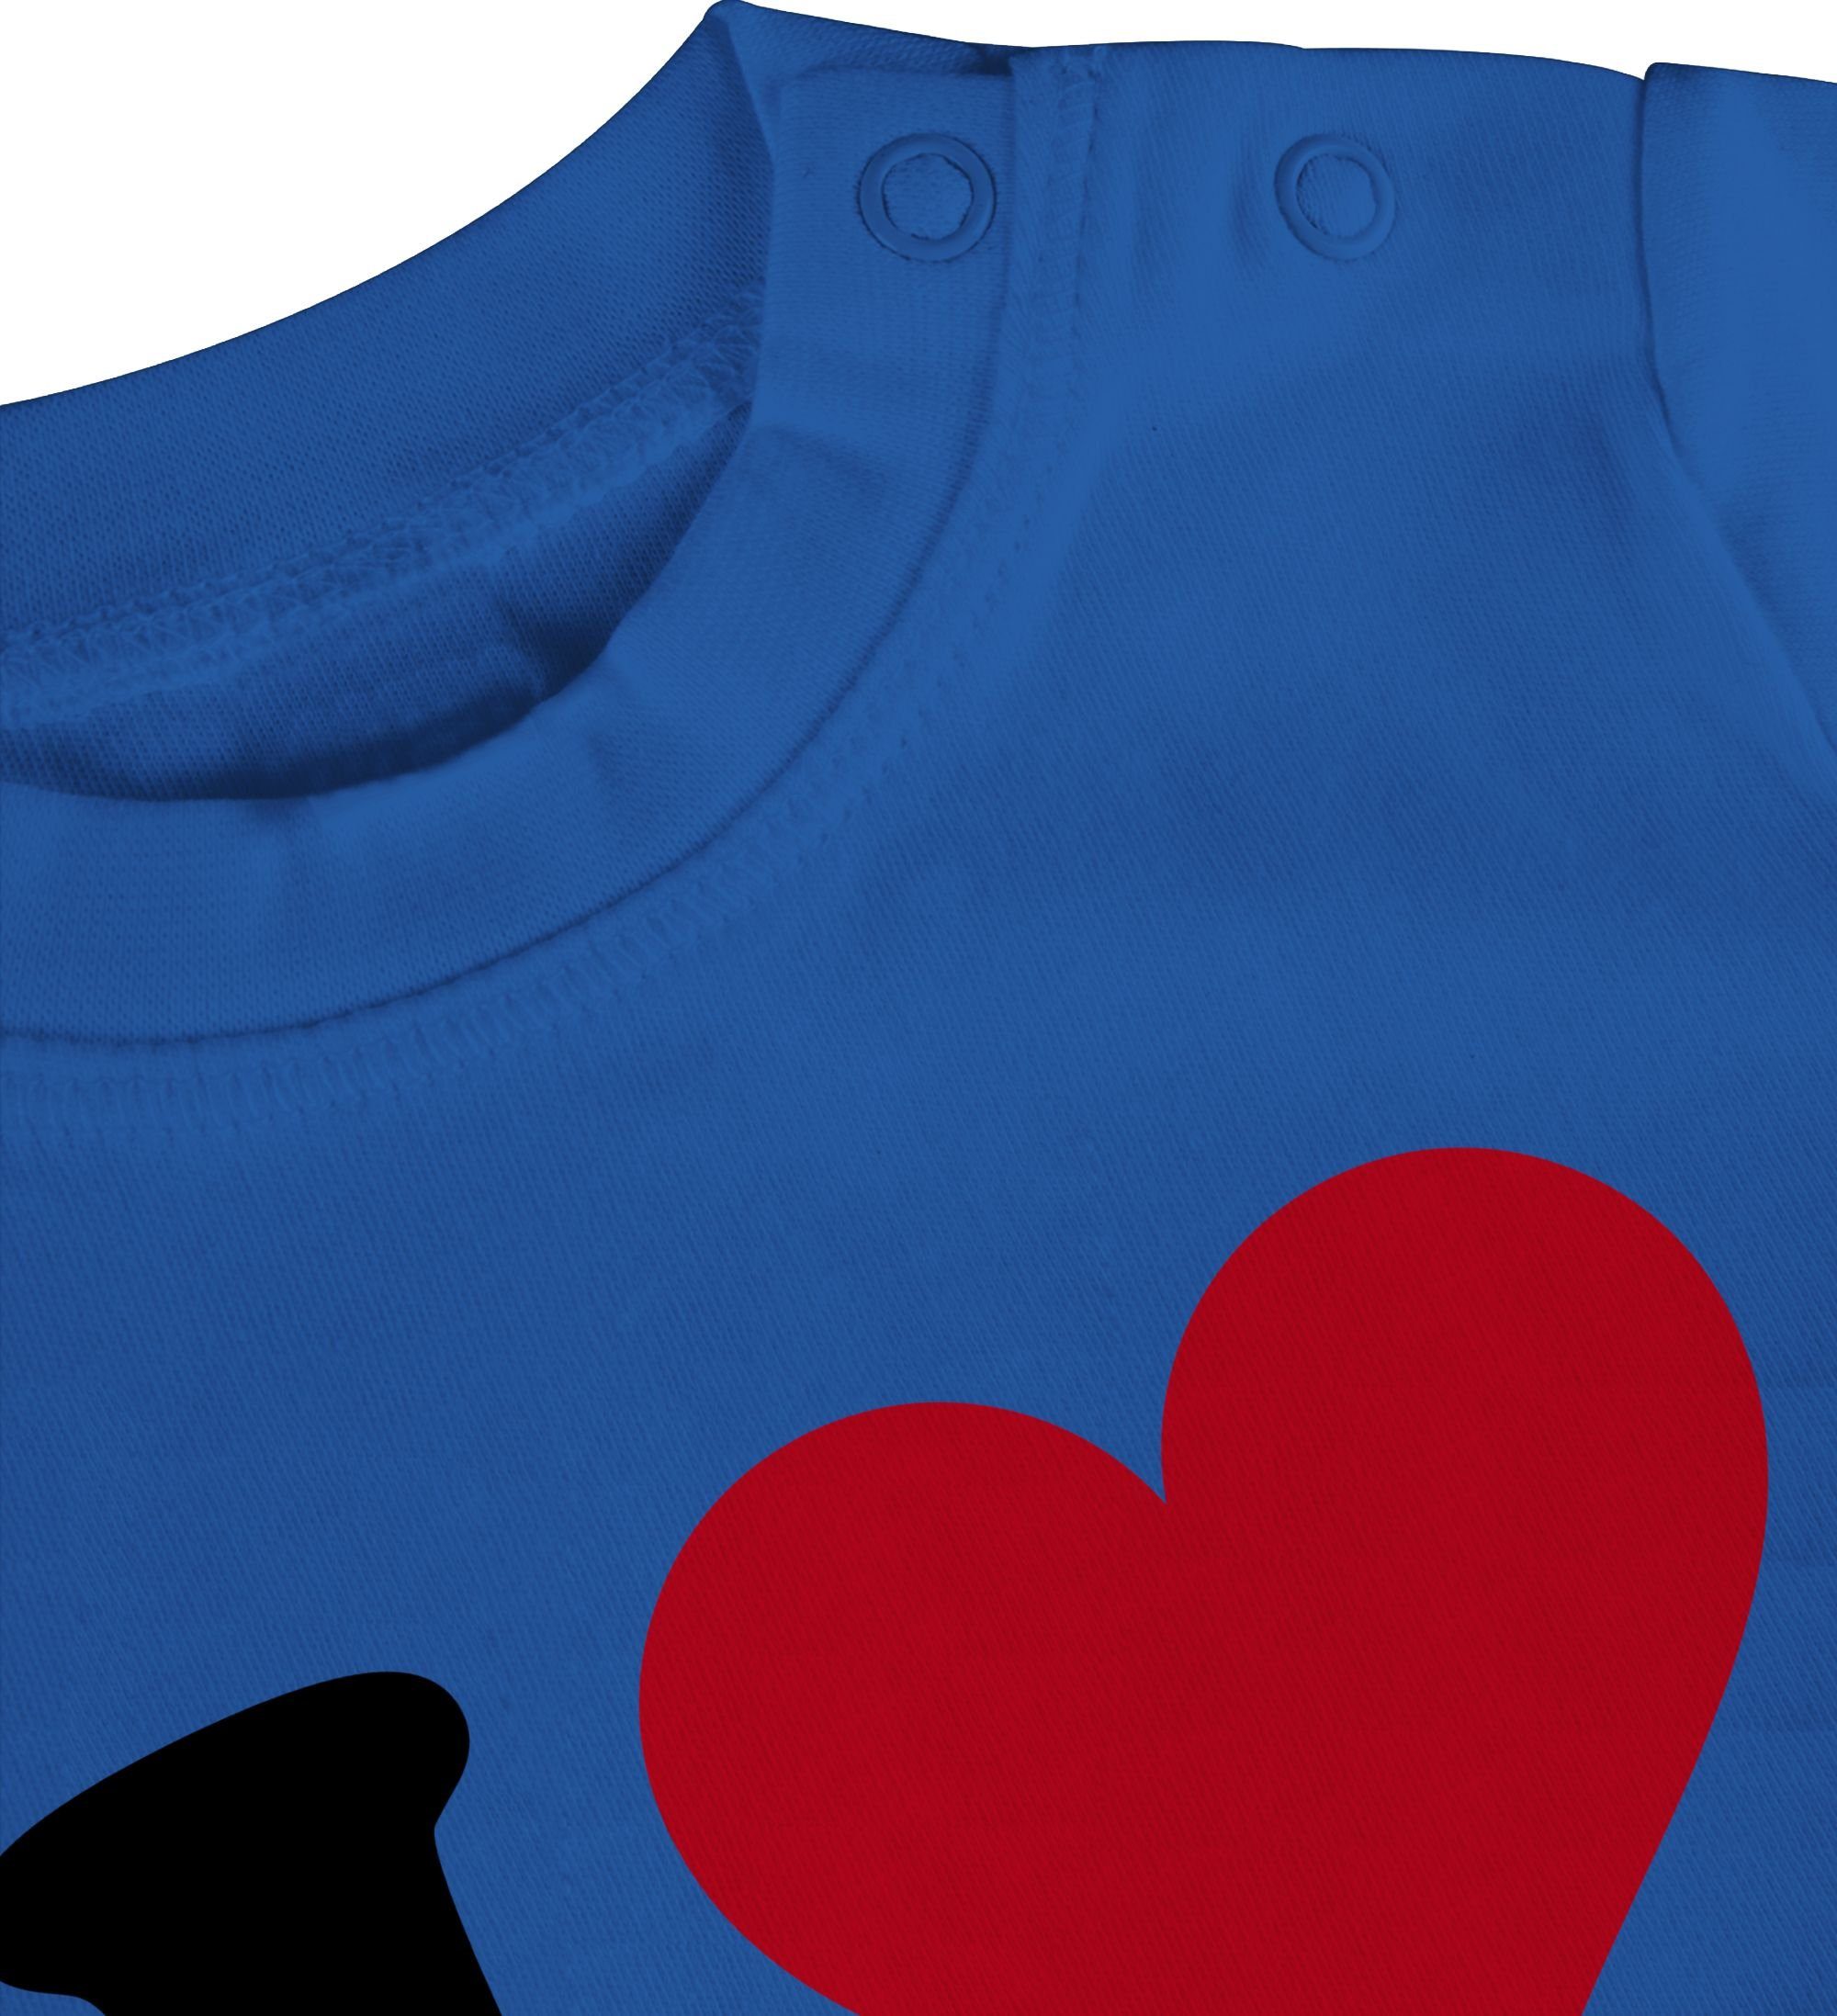 I T-Shirt Shirtracer Vatertag Geschenk Love 2 Royalblau Papa Baby